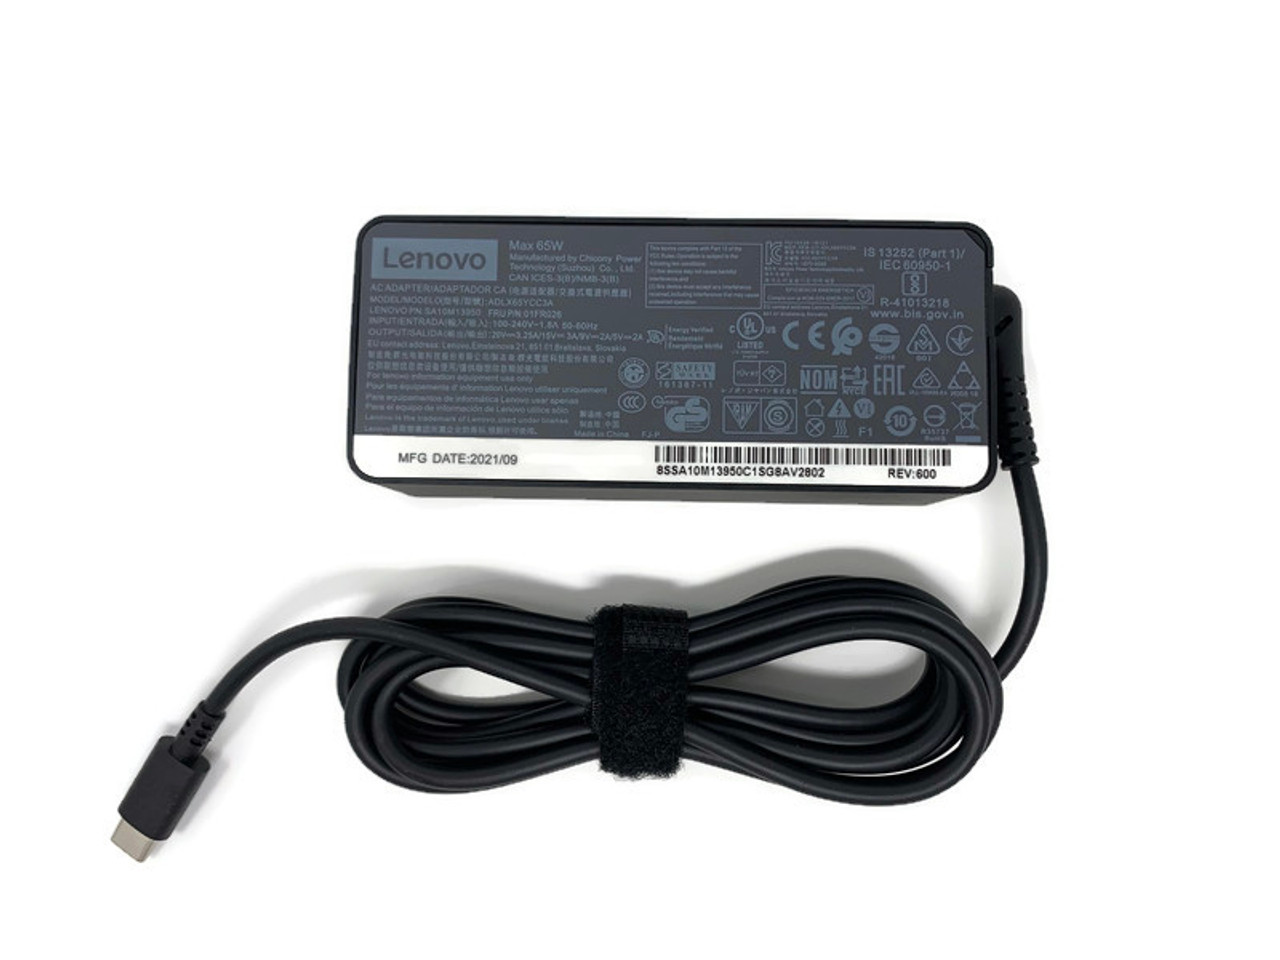 Lenovo 65W USB-C AC Adapter (w/Cord) - Minnesota Memory